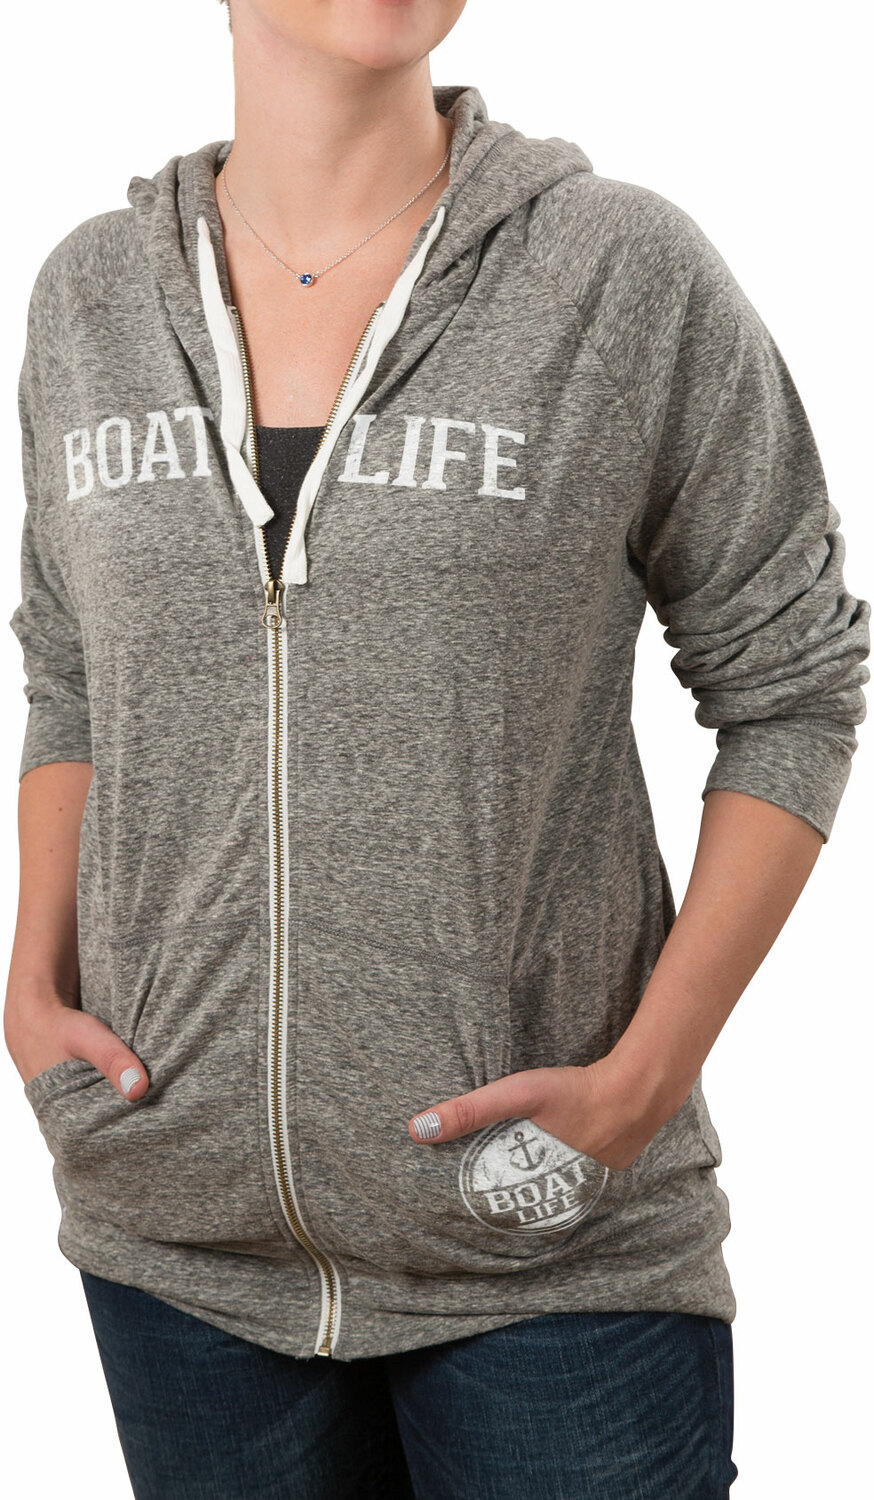 Boat Life by We People - Boat Life - Double Extra Large Dark Gray Unisex Hooded Sweatshirt